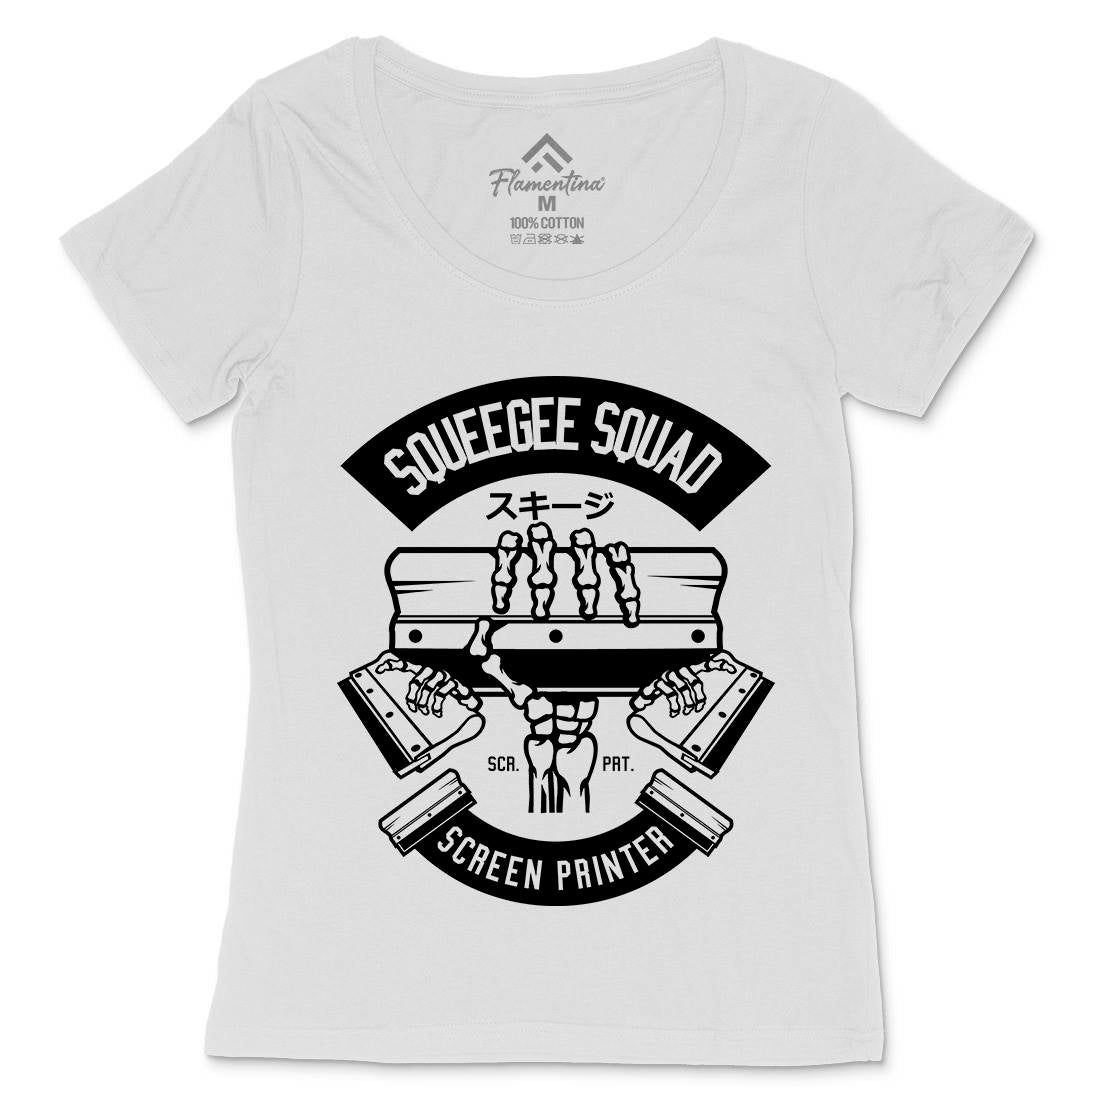 Squeegee Squad Womens Scoop Neck T-Shirt Retro B642